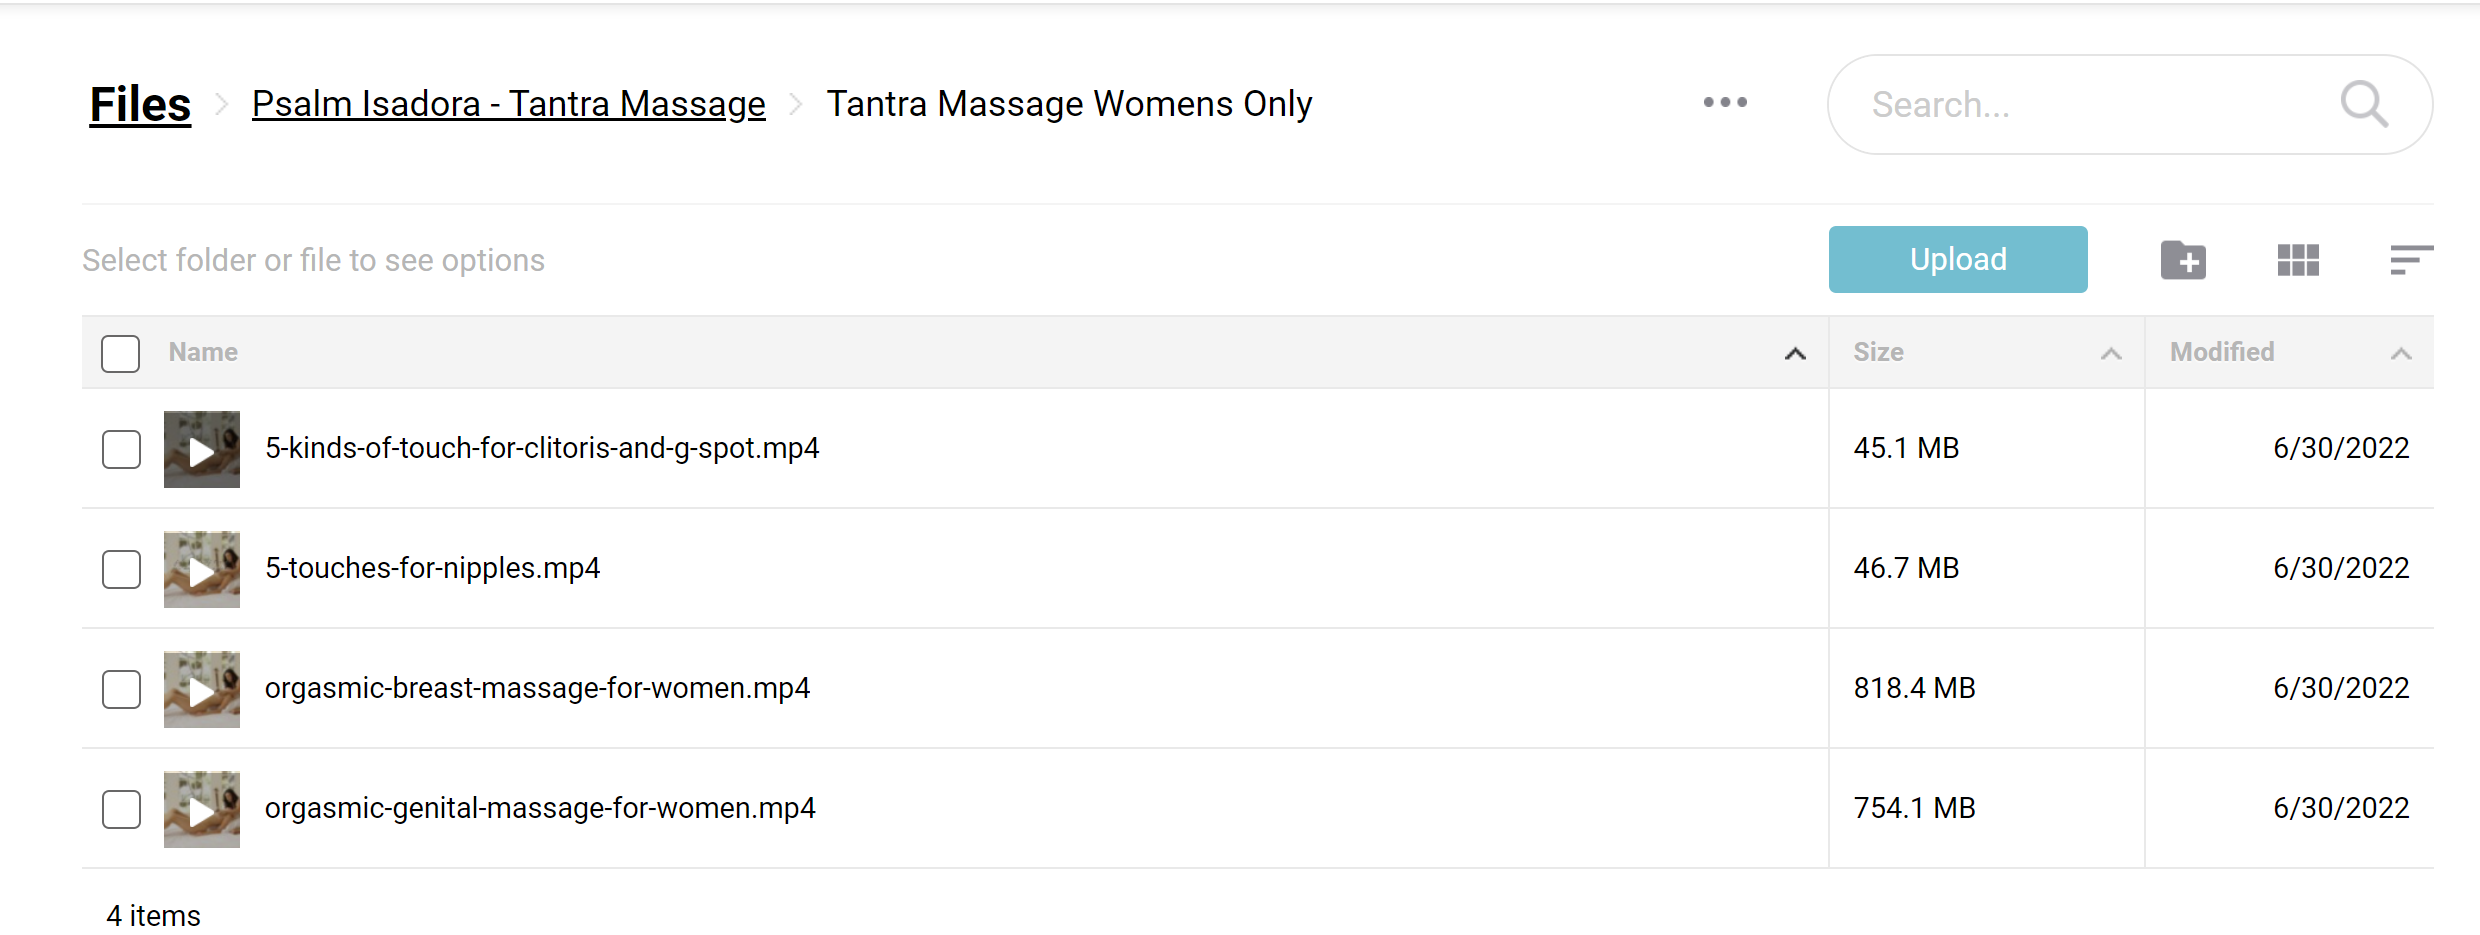 Tantra Massage Women